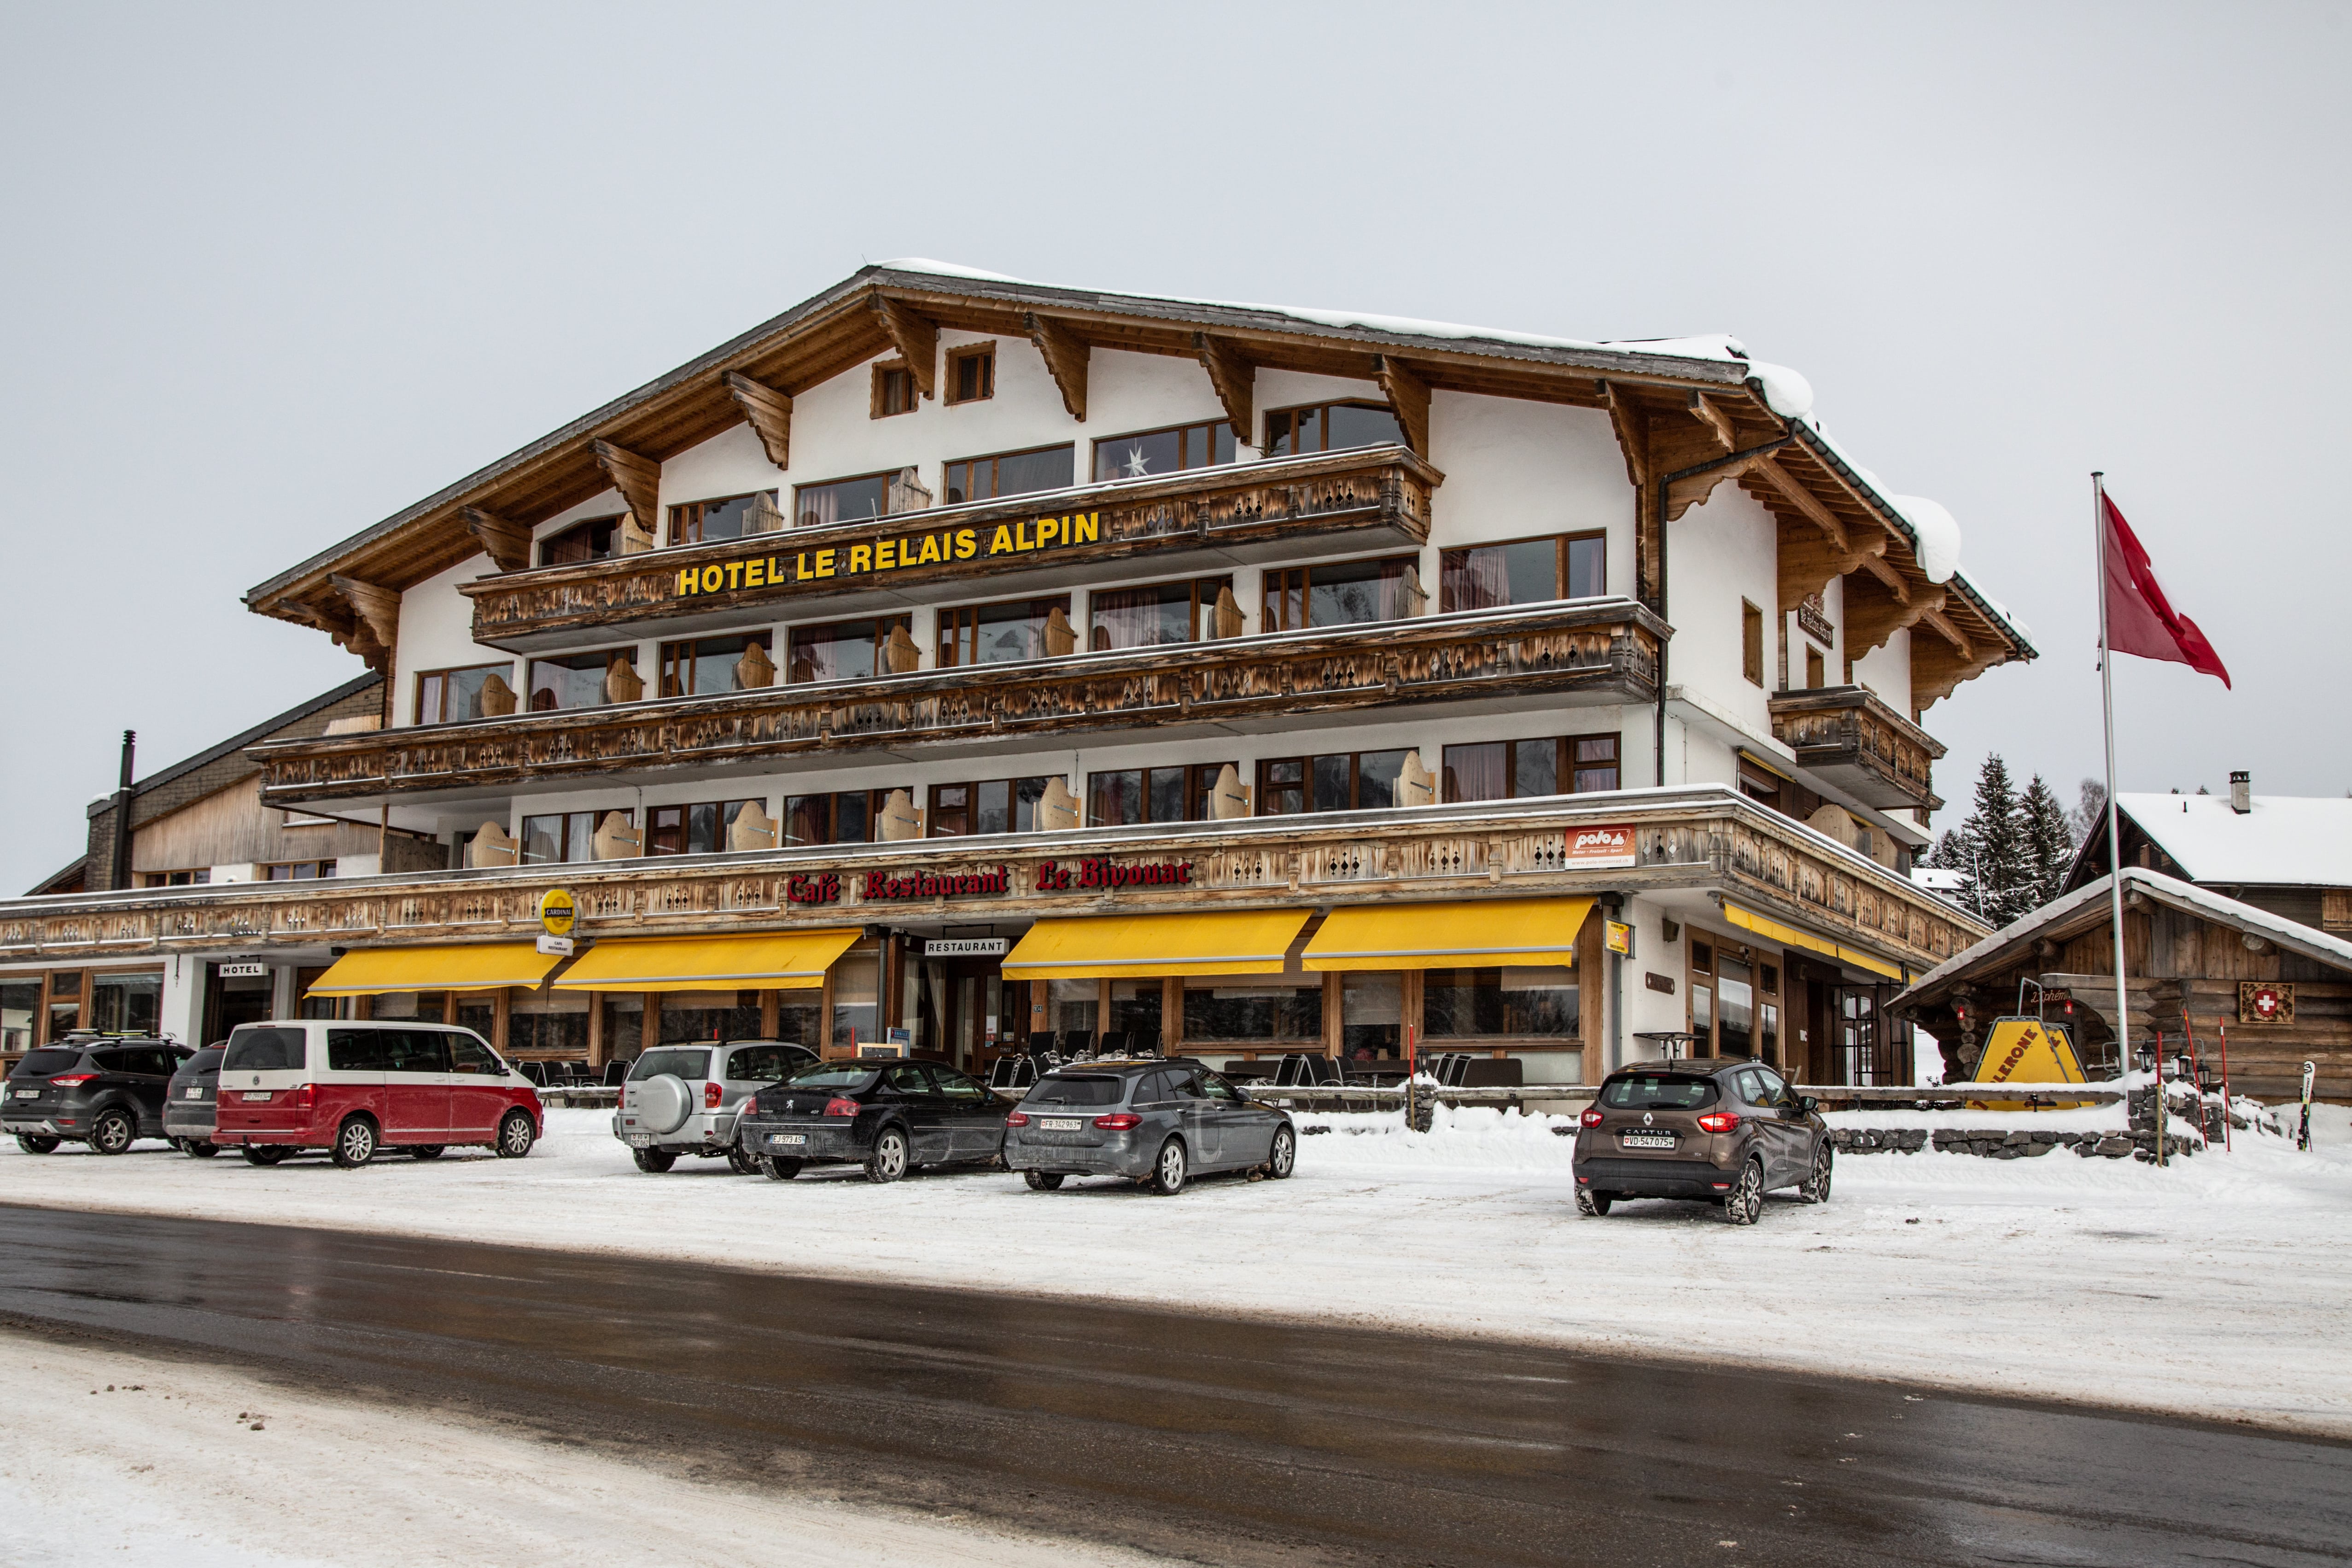 Building hotel Hotel Le Relais Alpin